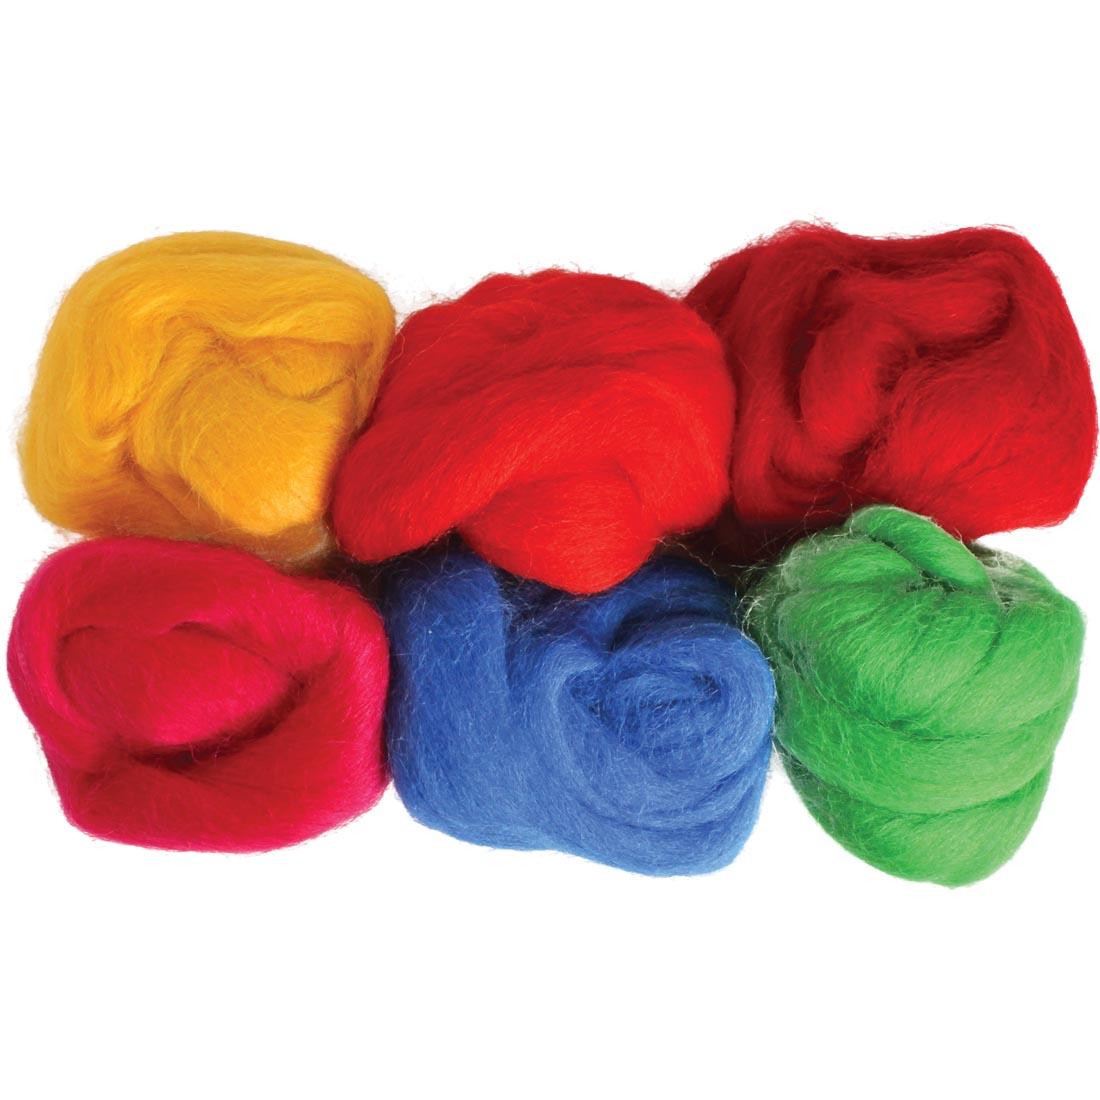 Six Different Colors of Craft Wool Fibers